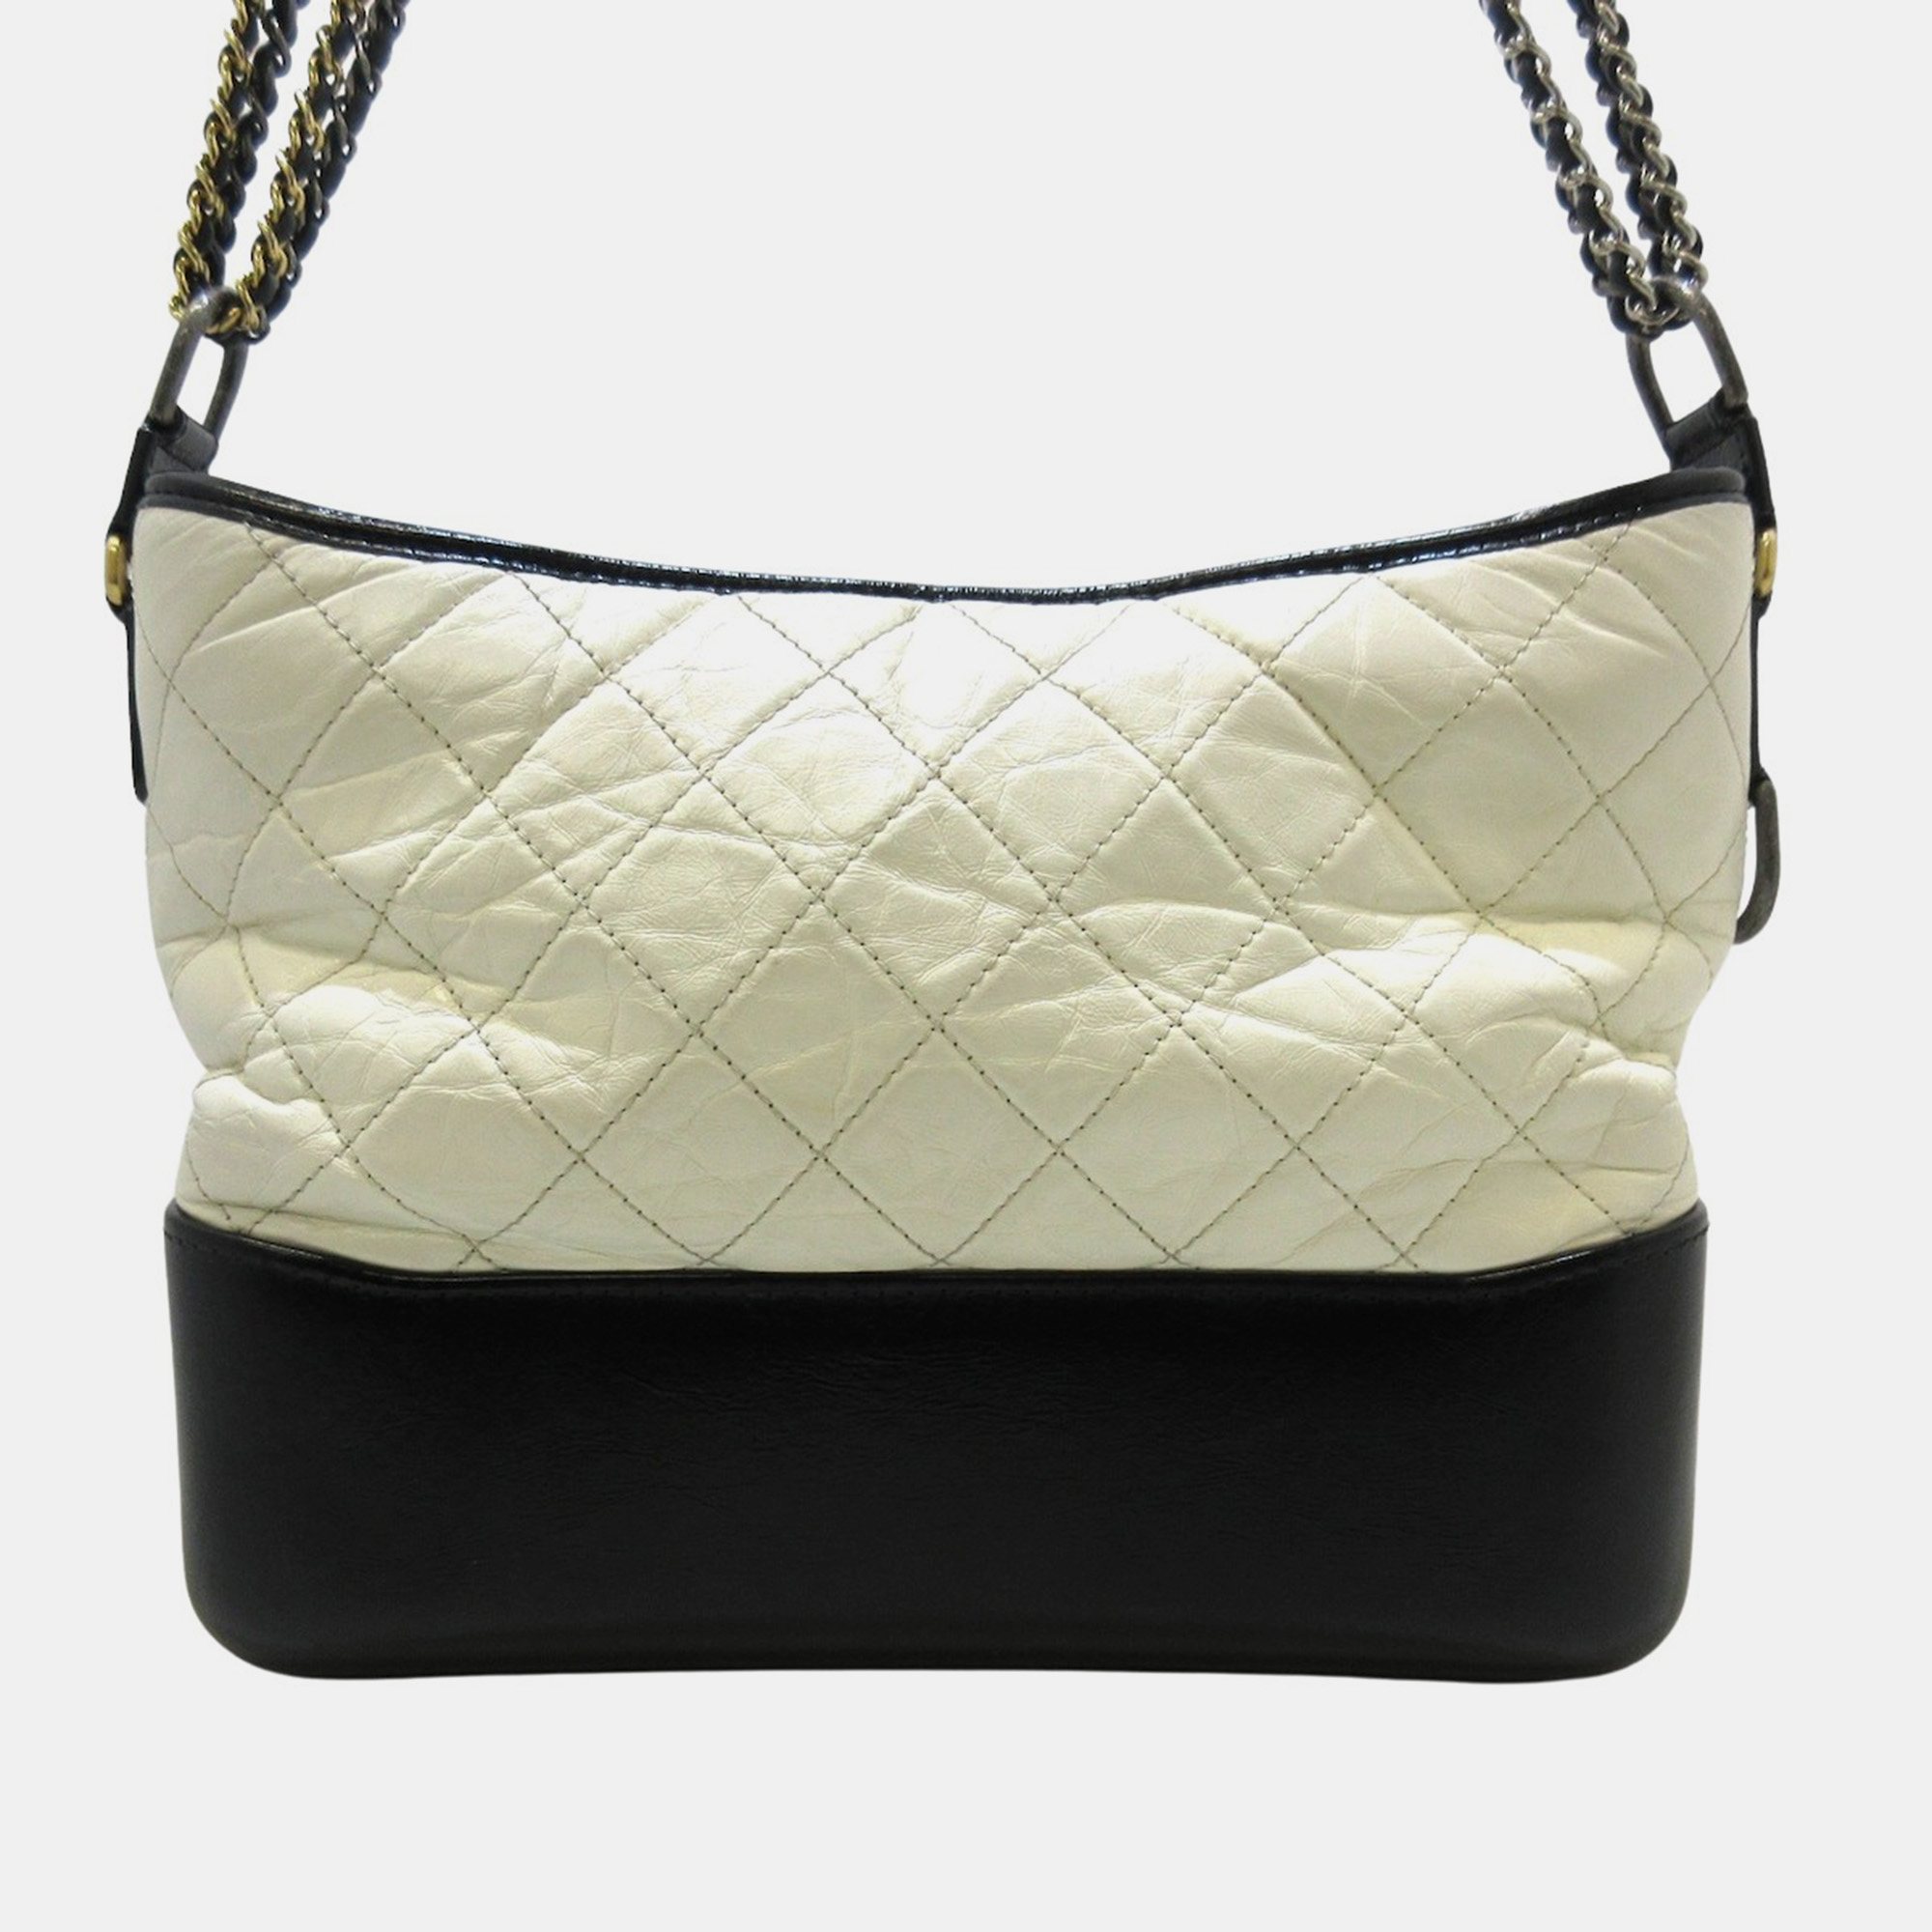 Chanel White Leather Gabrielle Shoulder Bag